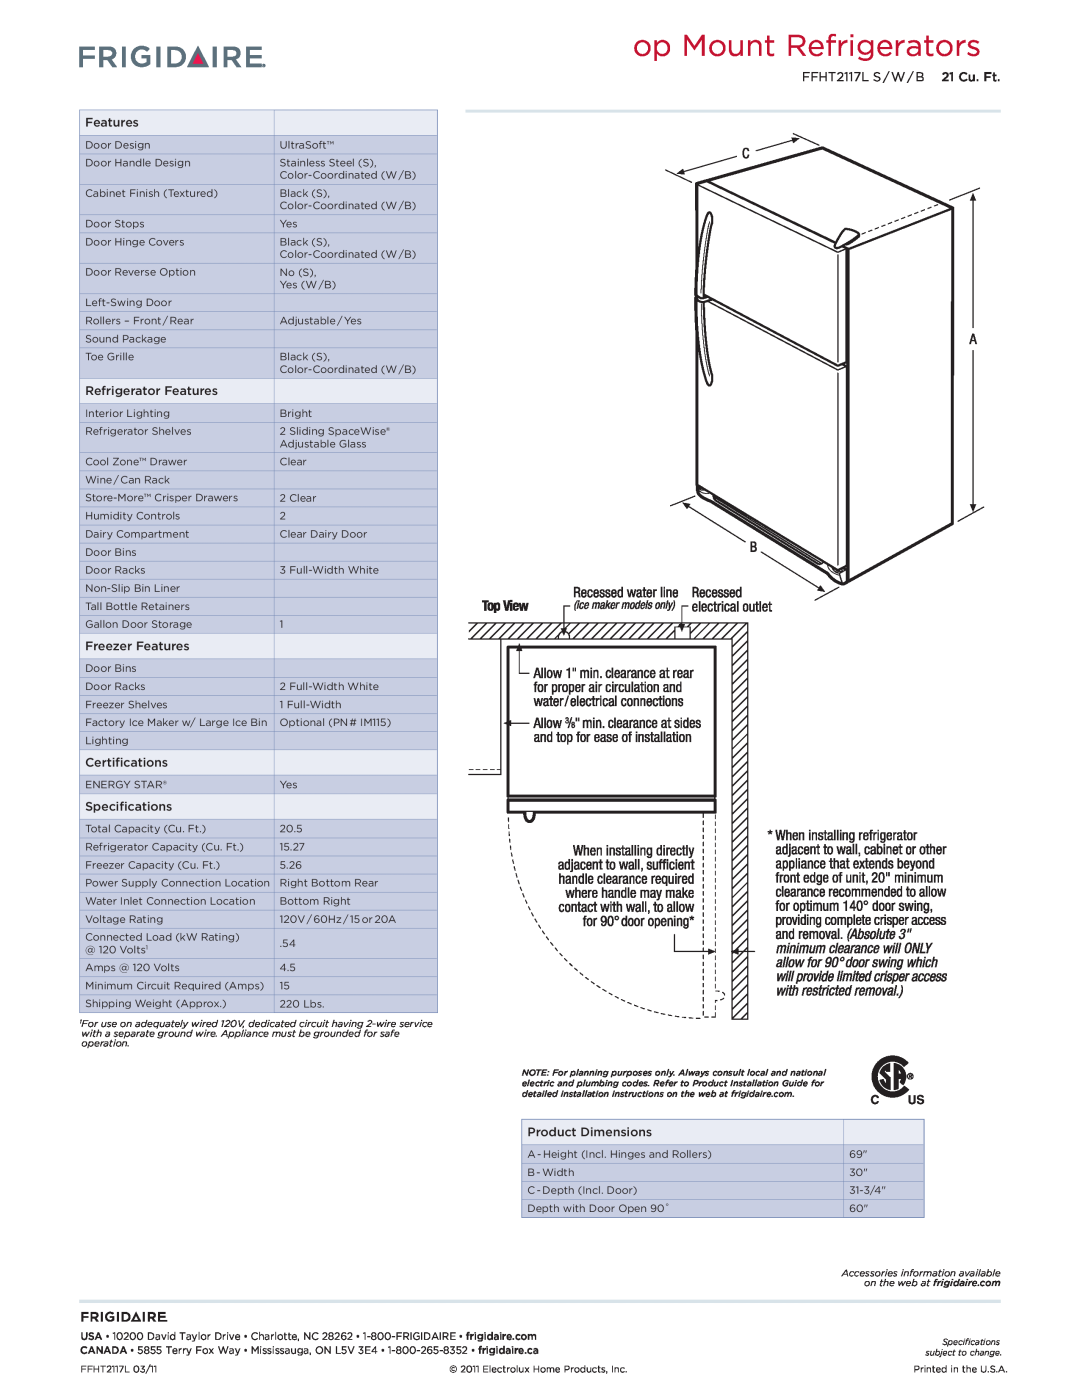 Frigidaire dimensions op Mount Refrigerators, FFHT2117L S / W / B 21 Cu. Ft 